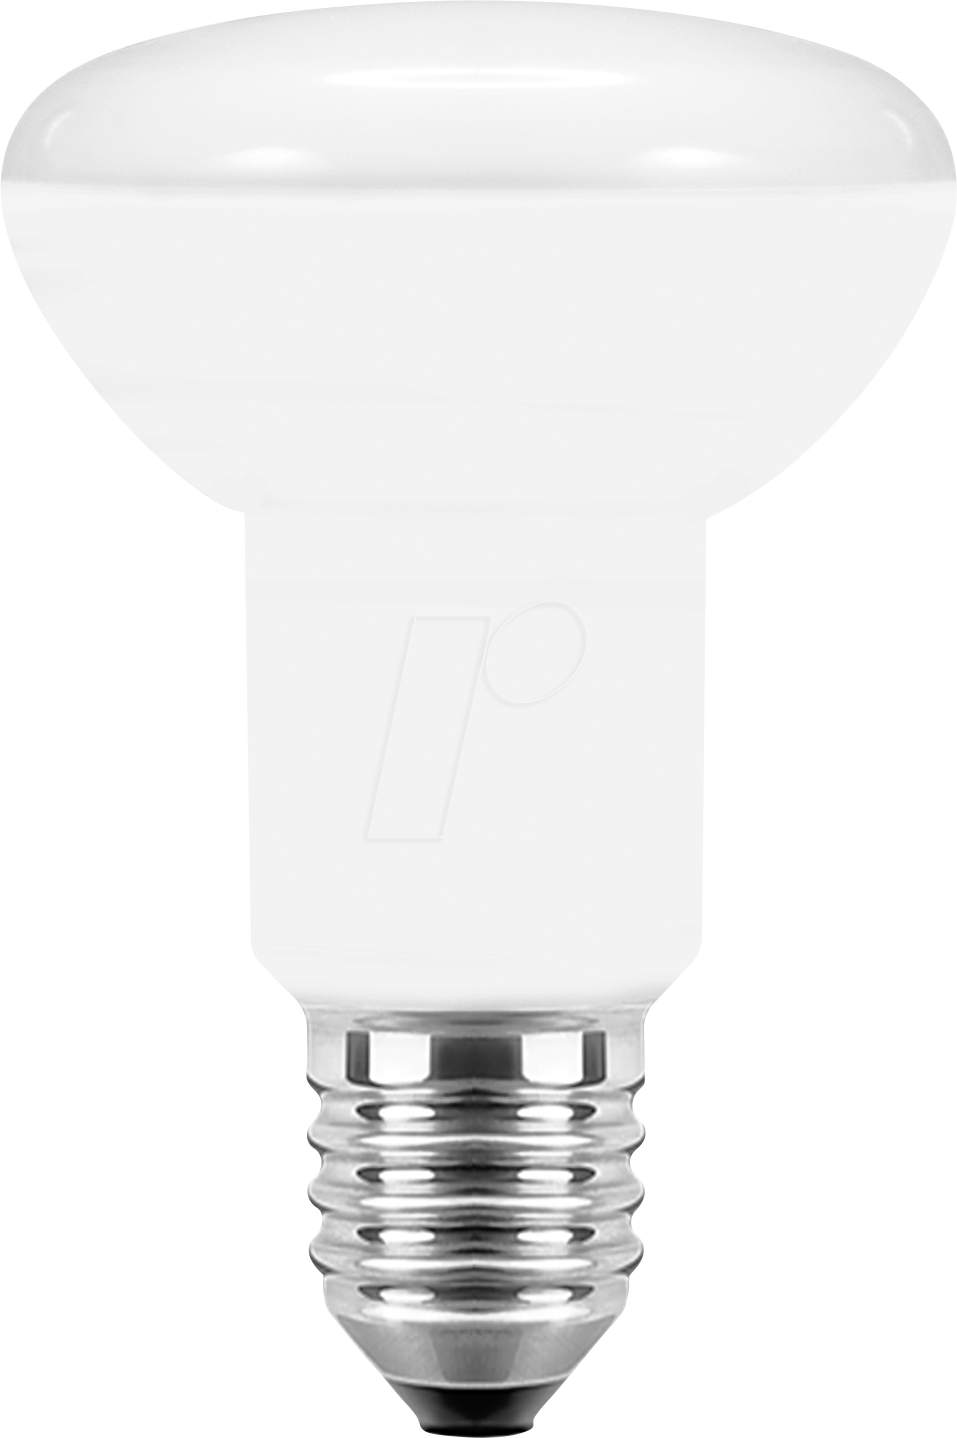 BLULAXA 49140 - LED SMD Lampe R63 E27 8W 810 lm WW 120° von BLULAXA